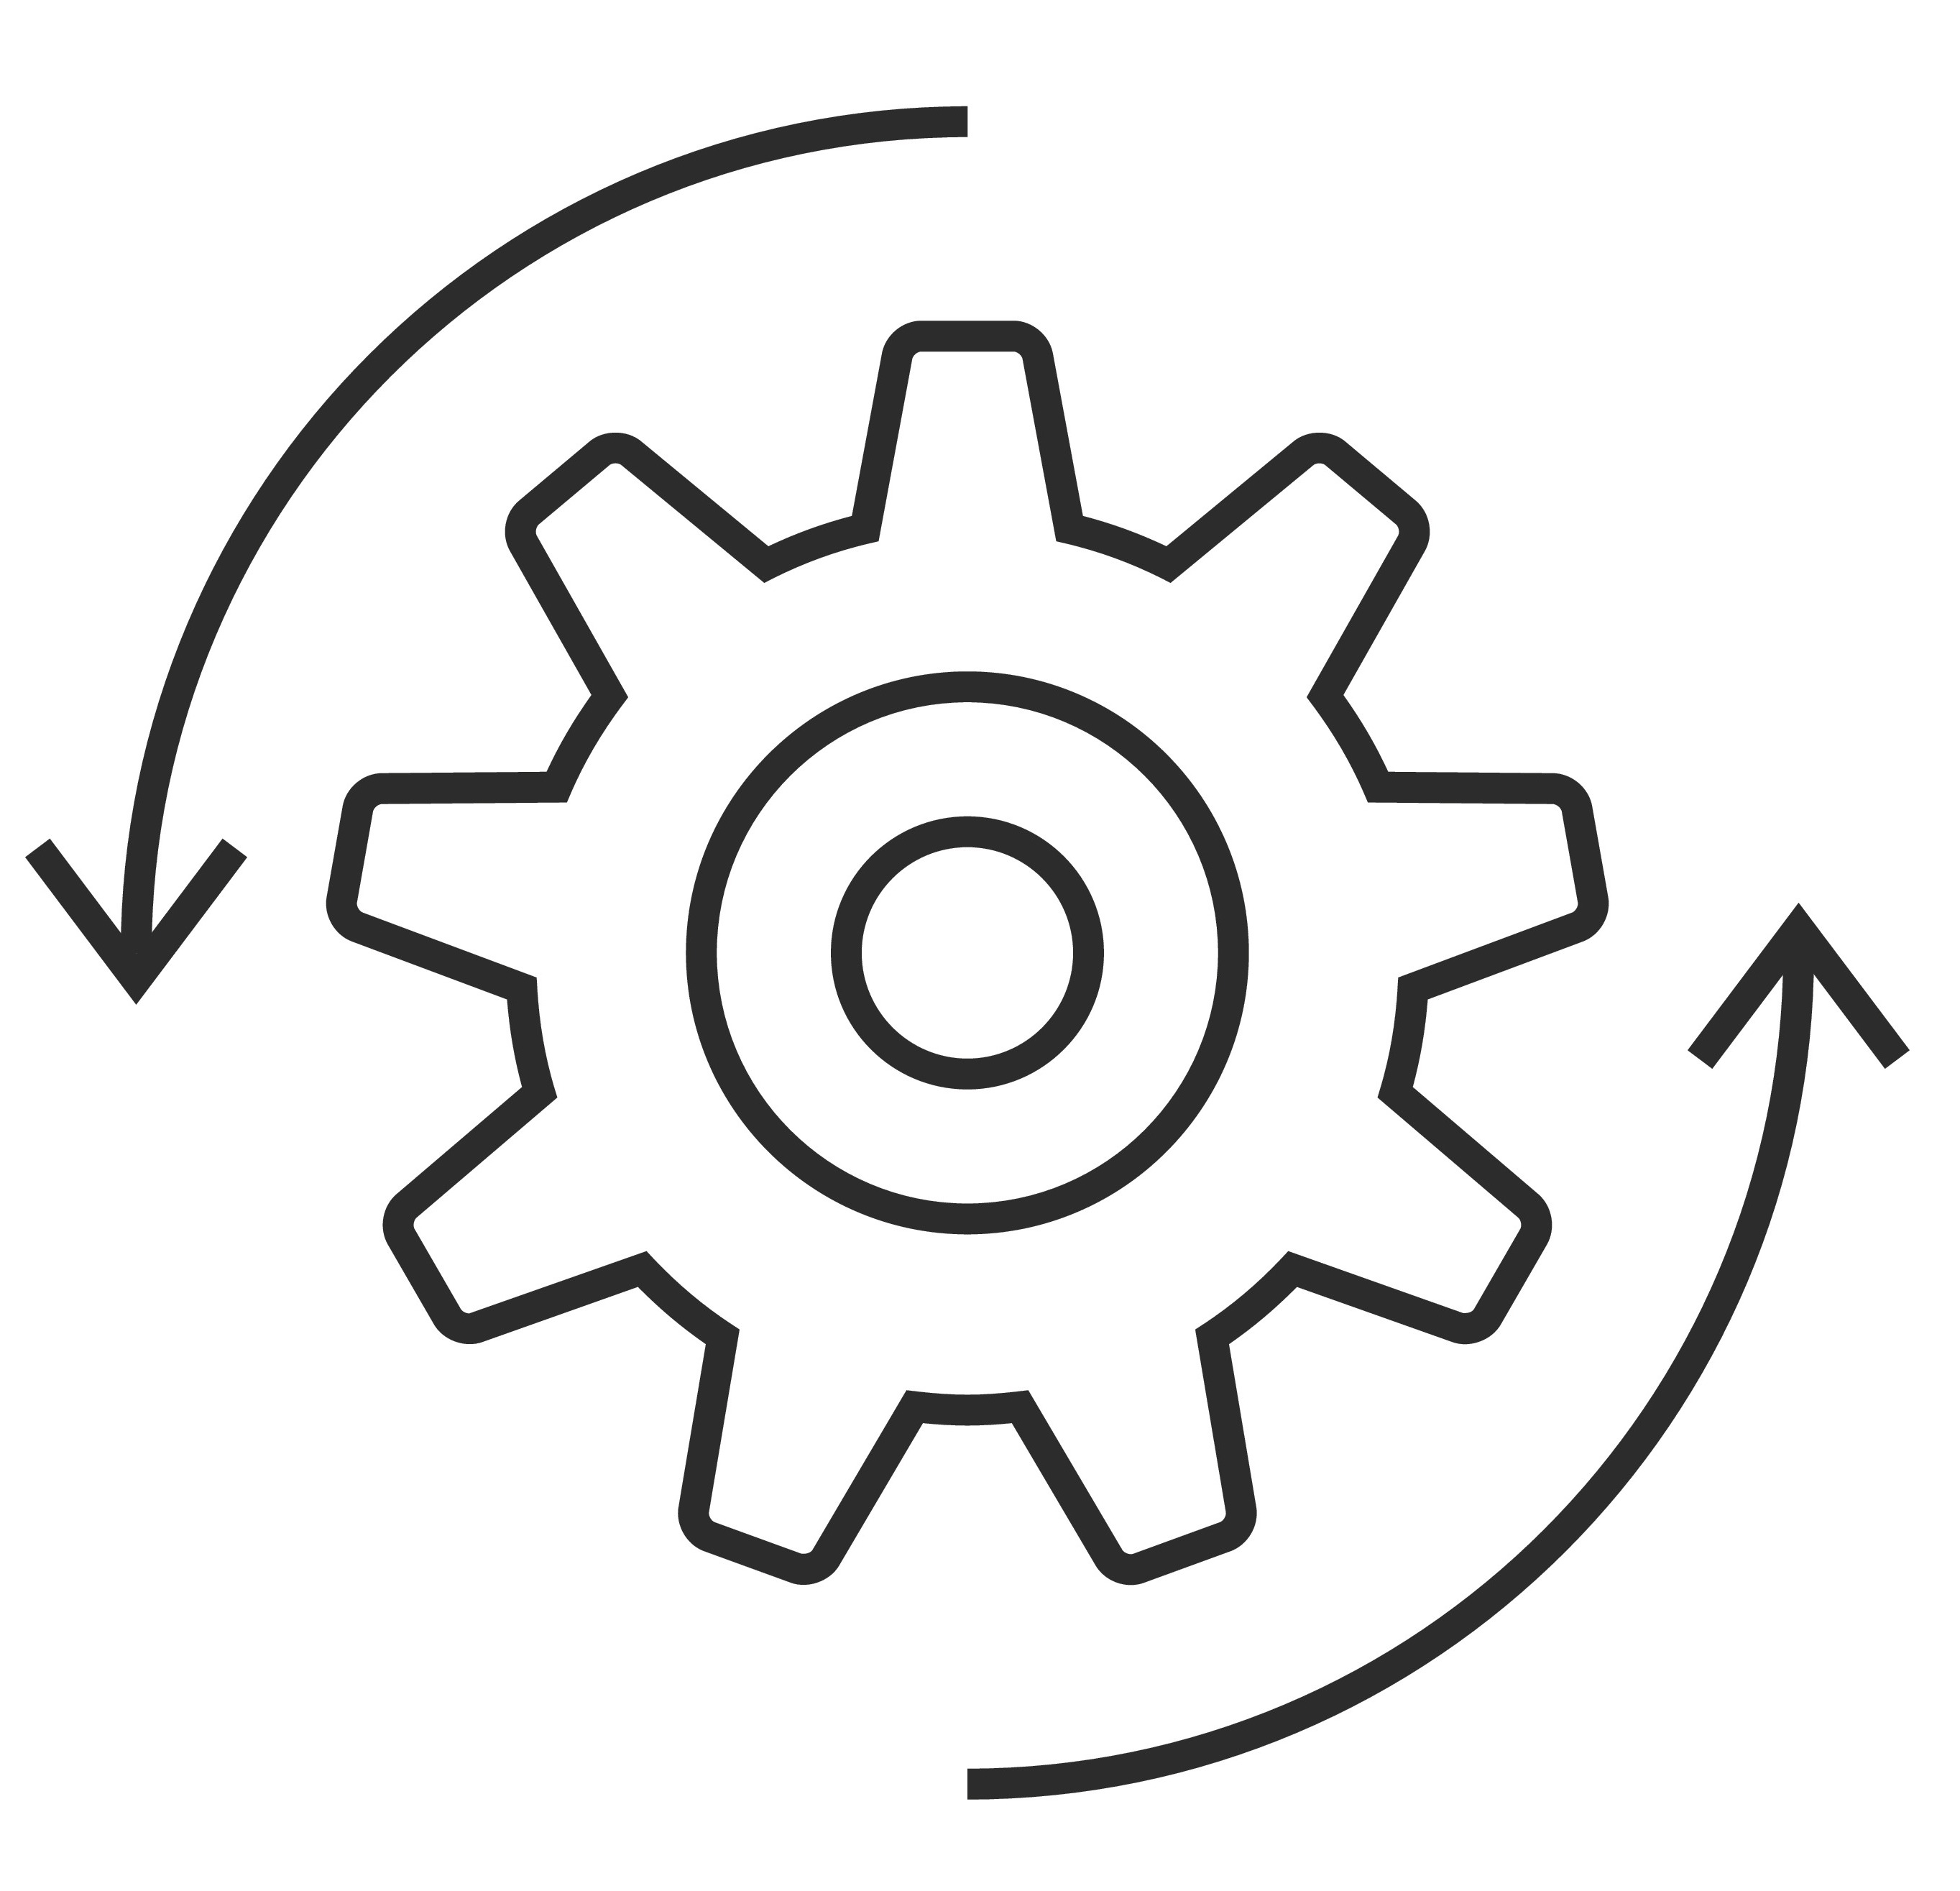 image of an wheel